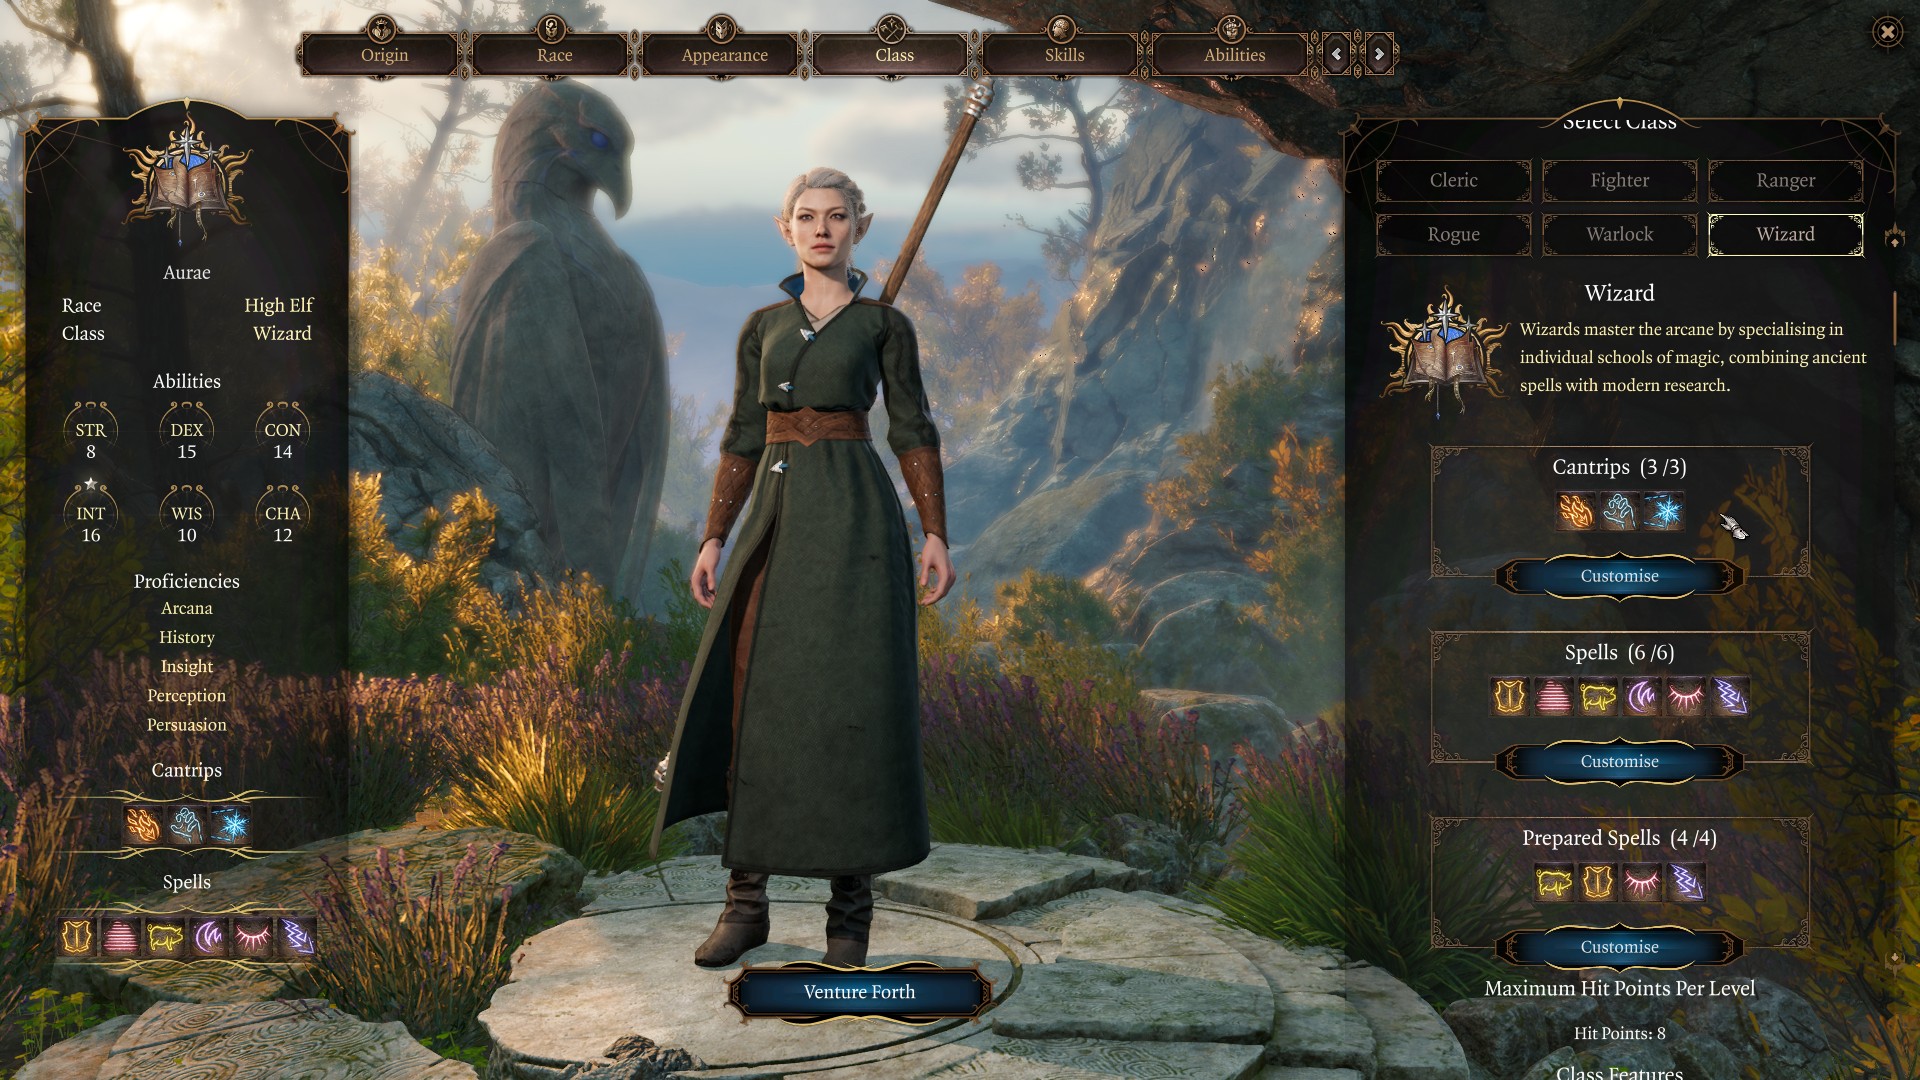 Baldur's Gate 3 classes: a High-Elf Wizard in the character creation screen.